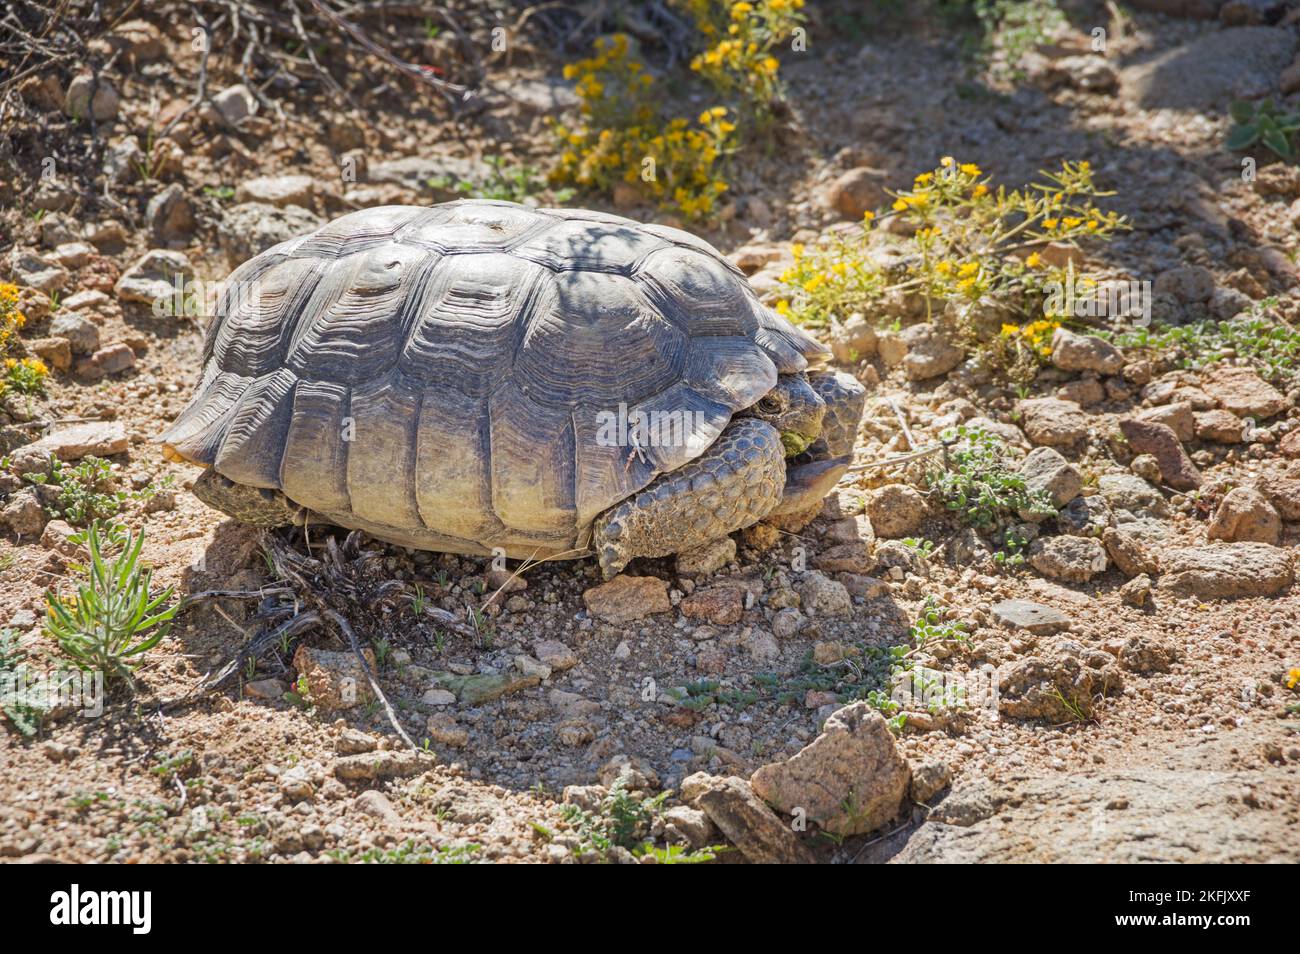 wild desert tortoise or Gopherus agassizii in Joshua Tree National Park Stock Photo